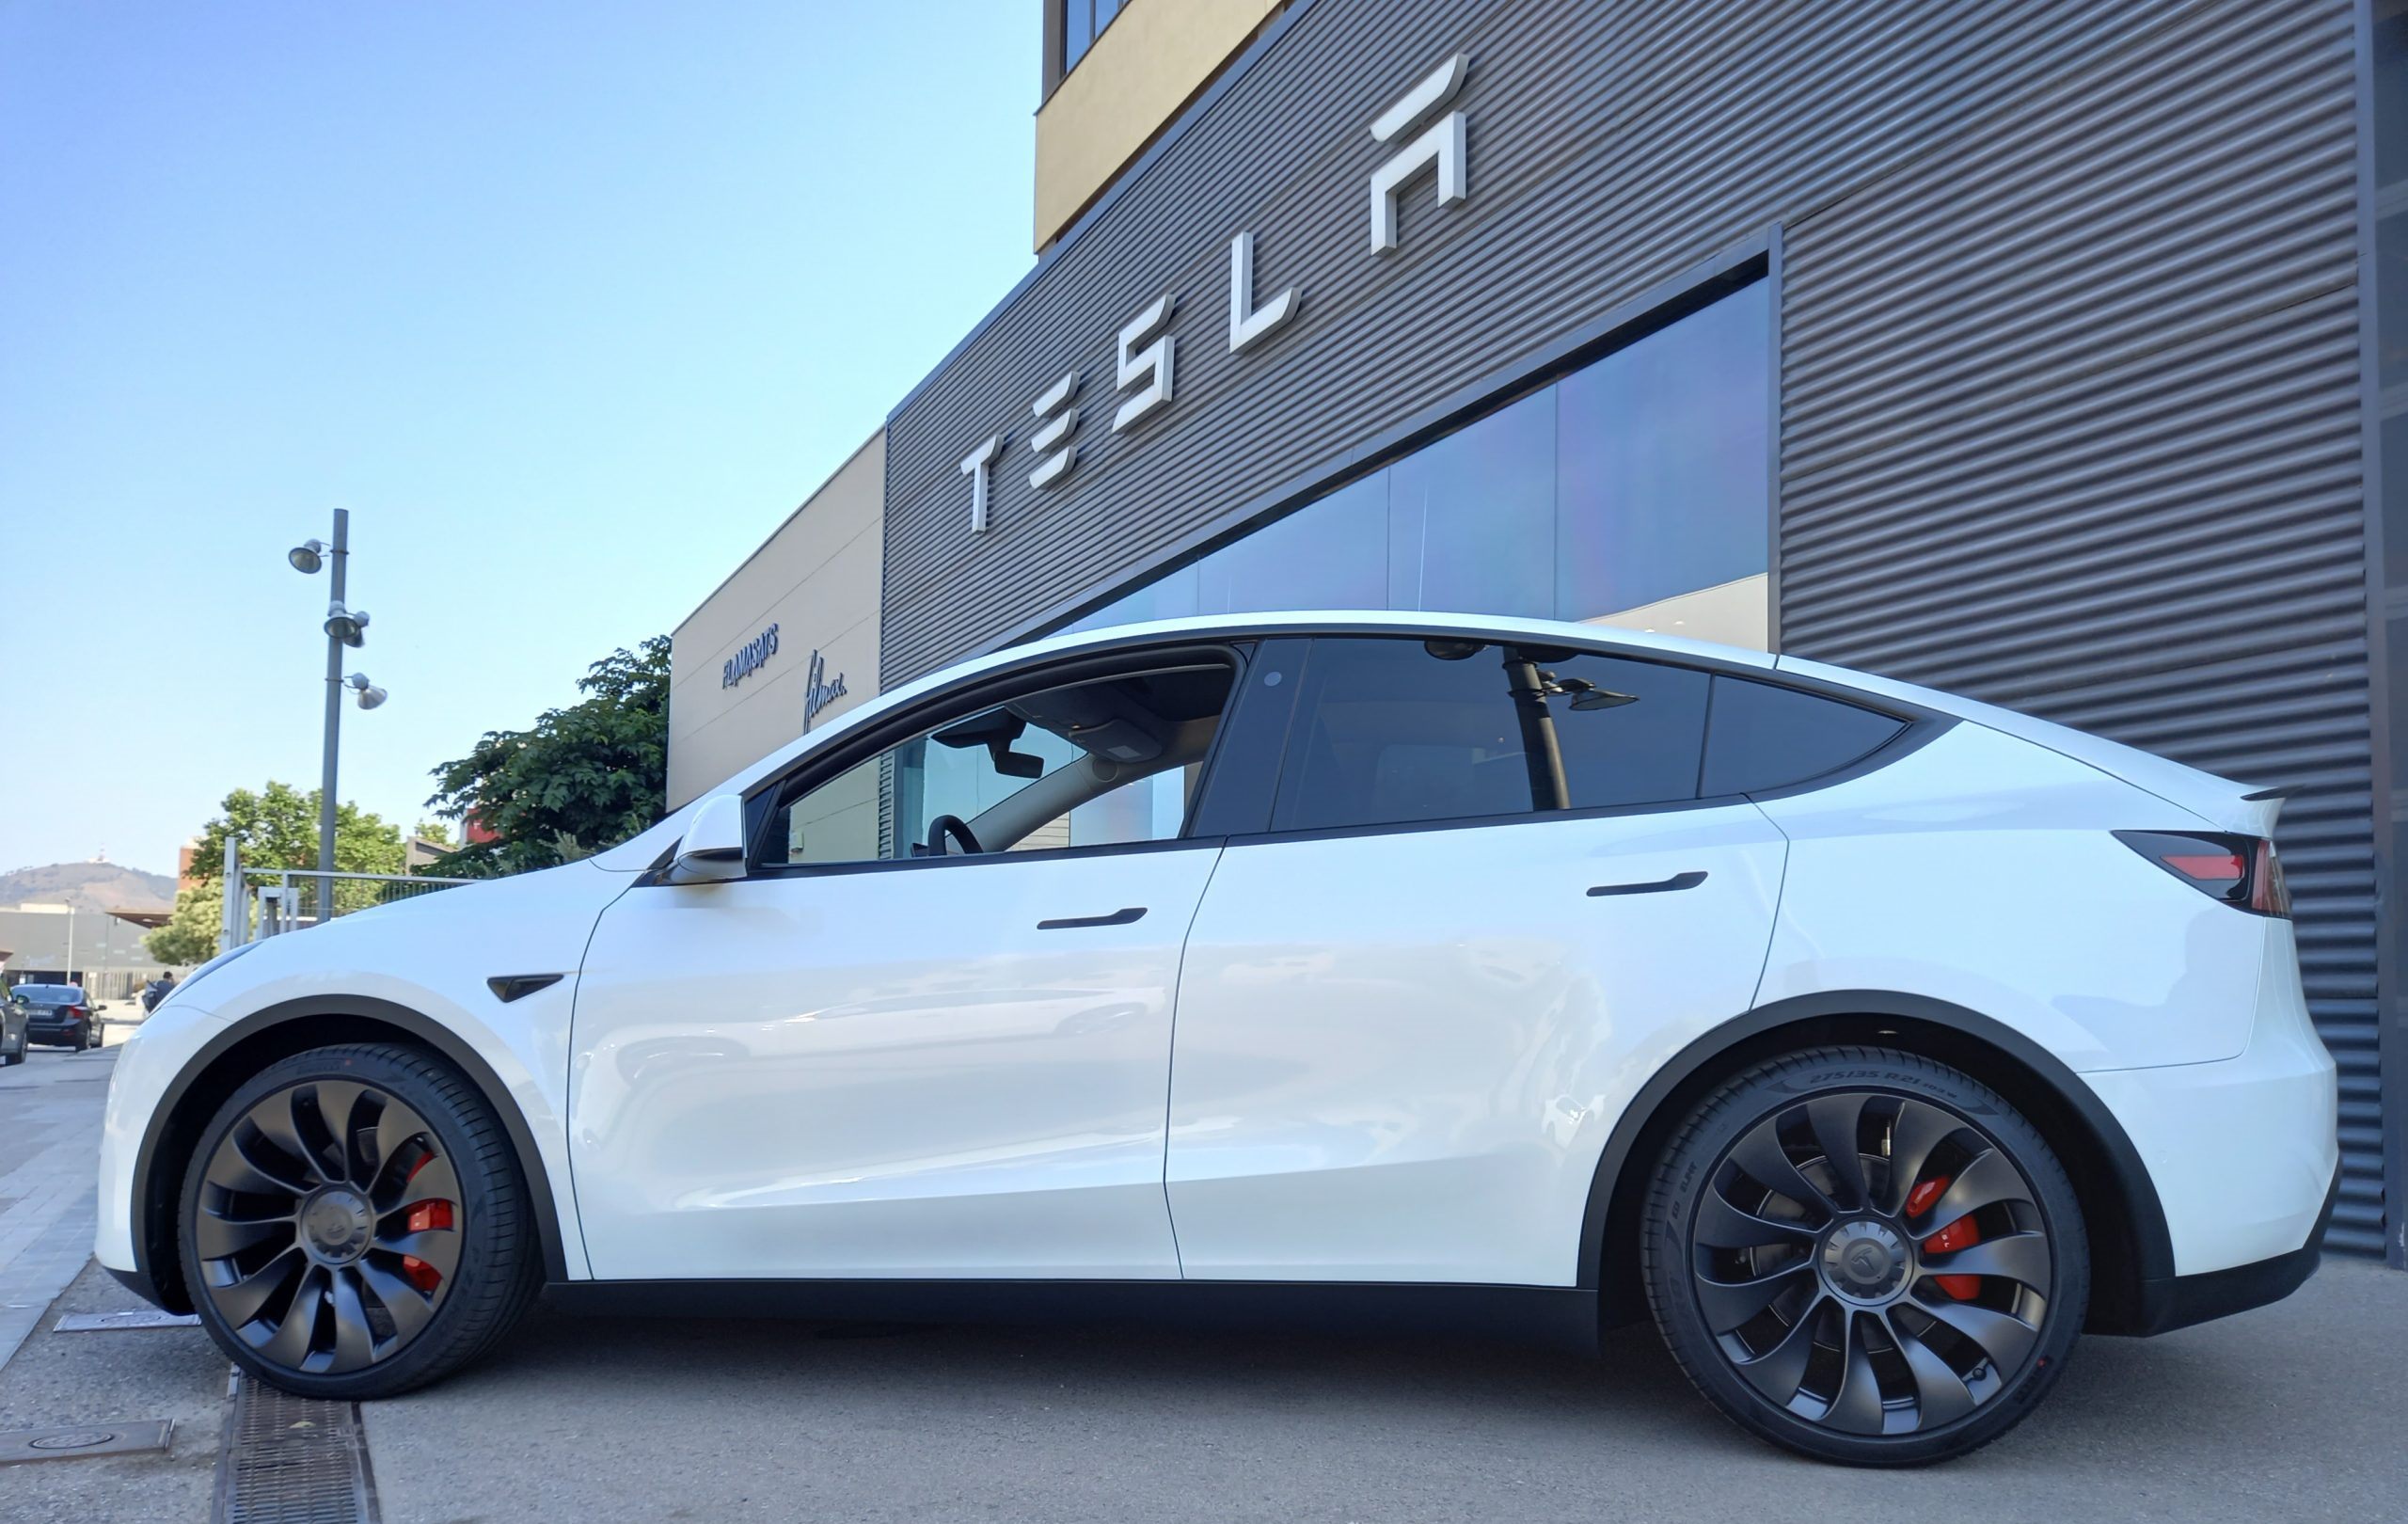 Tesla recalls 1.8 million vehicles due to risk of bonnets detaching